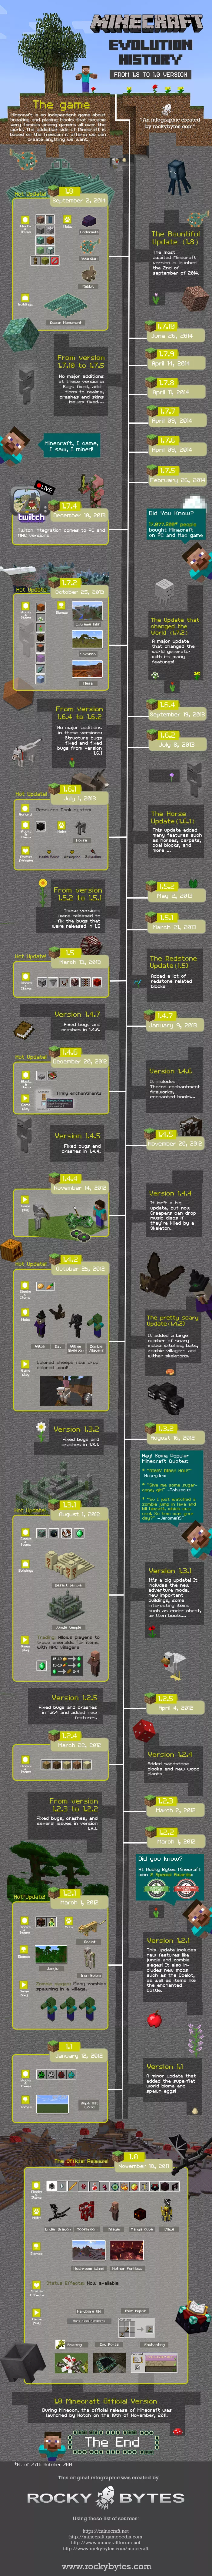 Minecraft history infographic